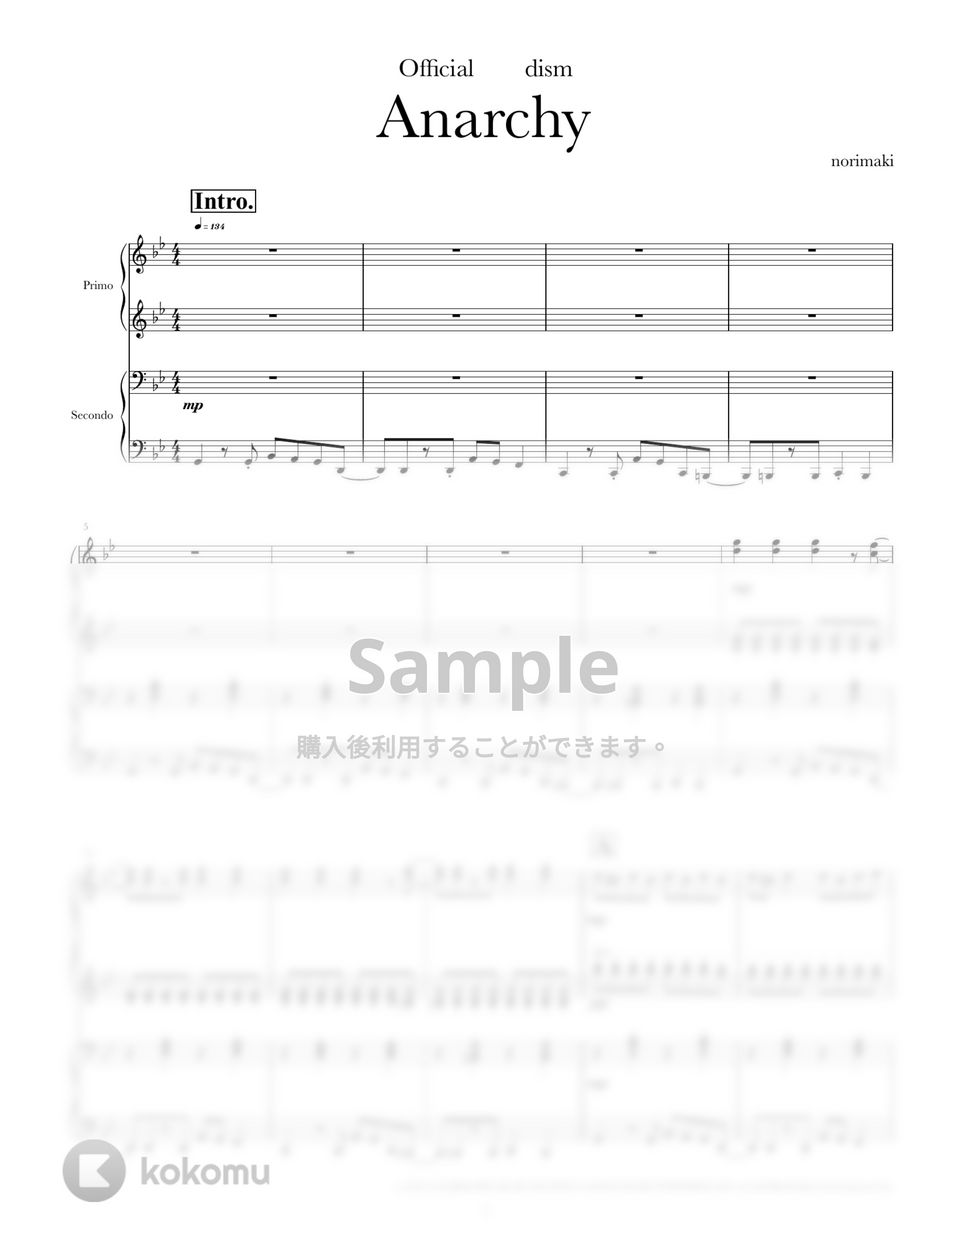 Official髭男dim - Anarchy (ピアノ連弾) by norimaki